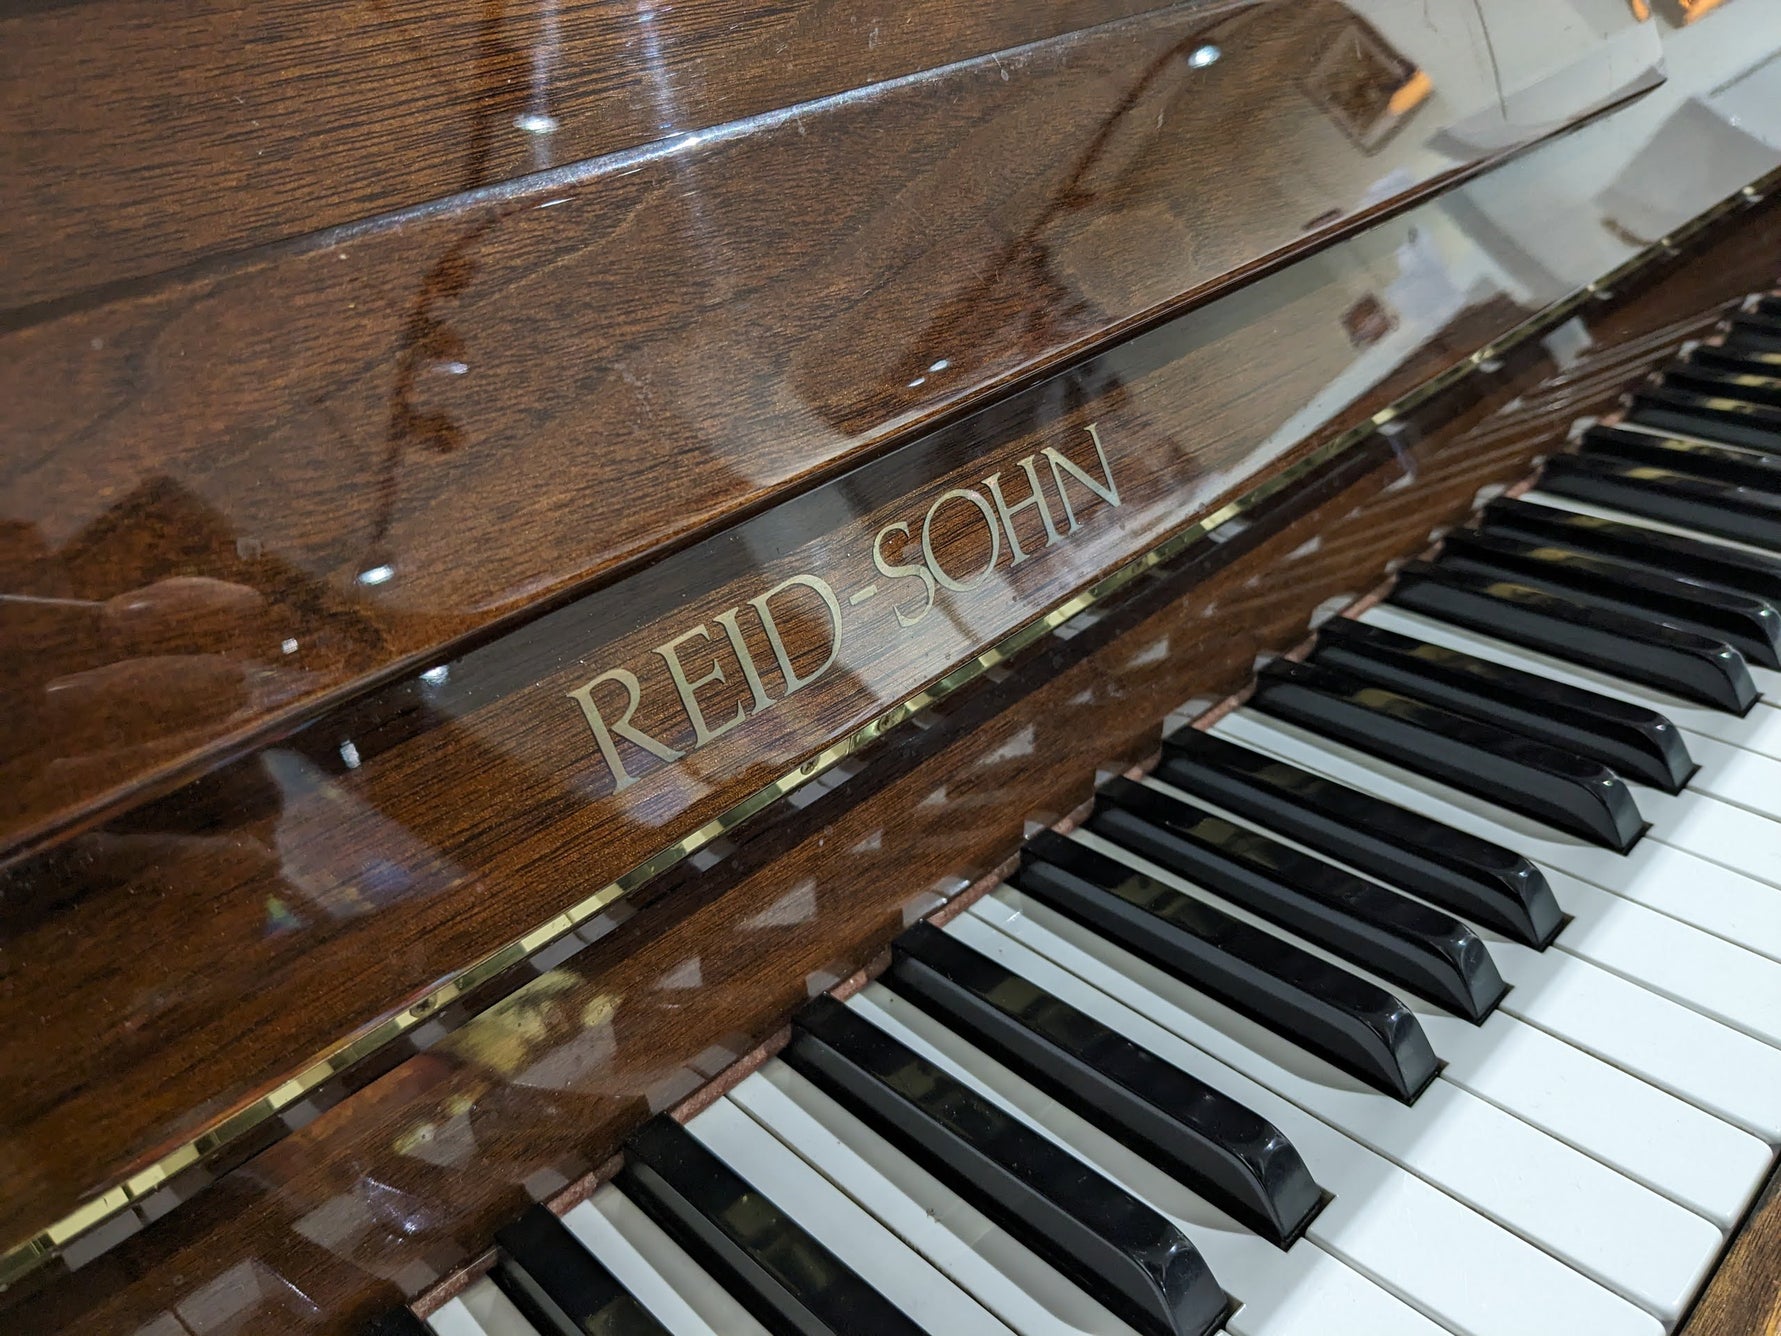 Reid-Sohn Upright Piano Polished Walnut (Second Hand)